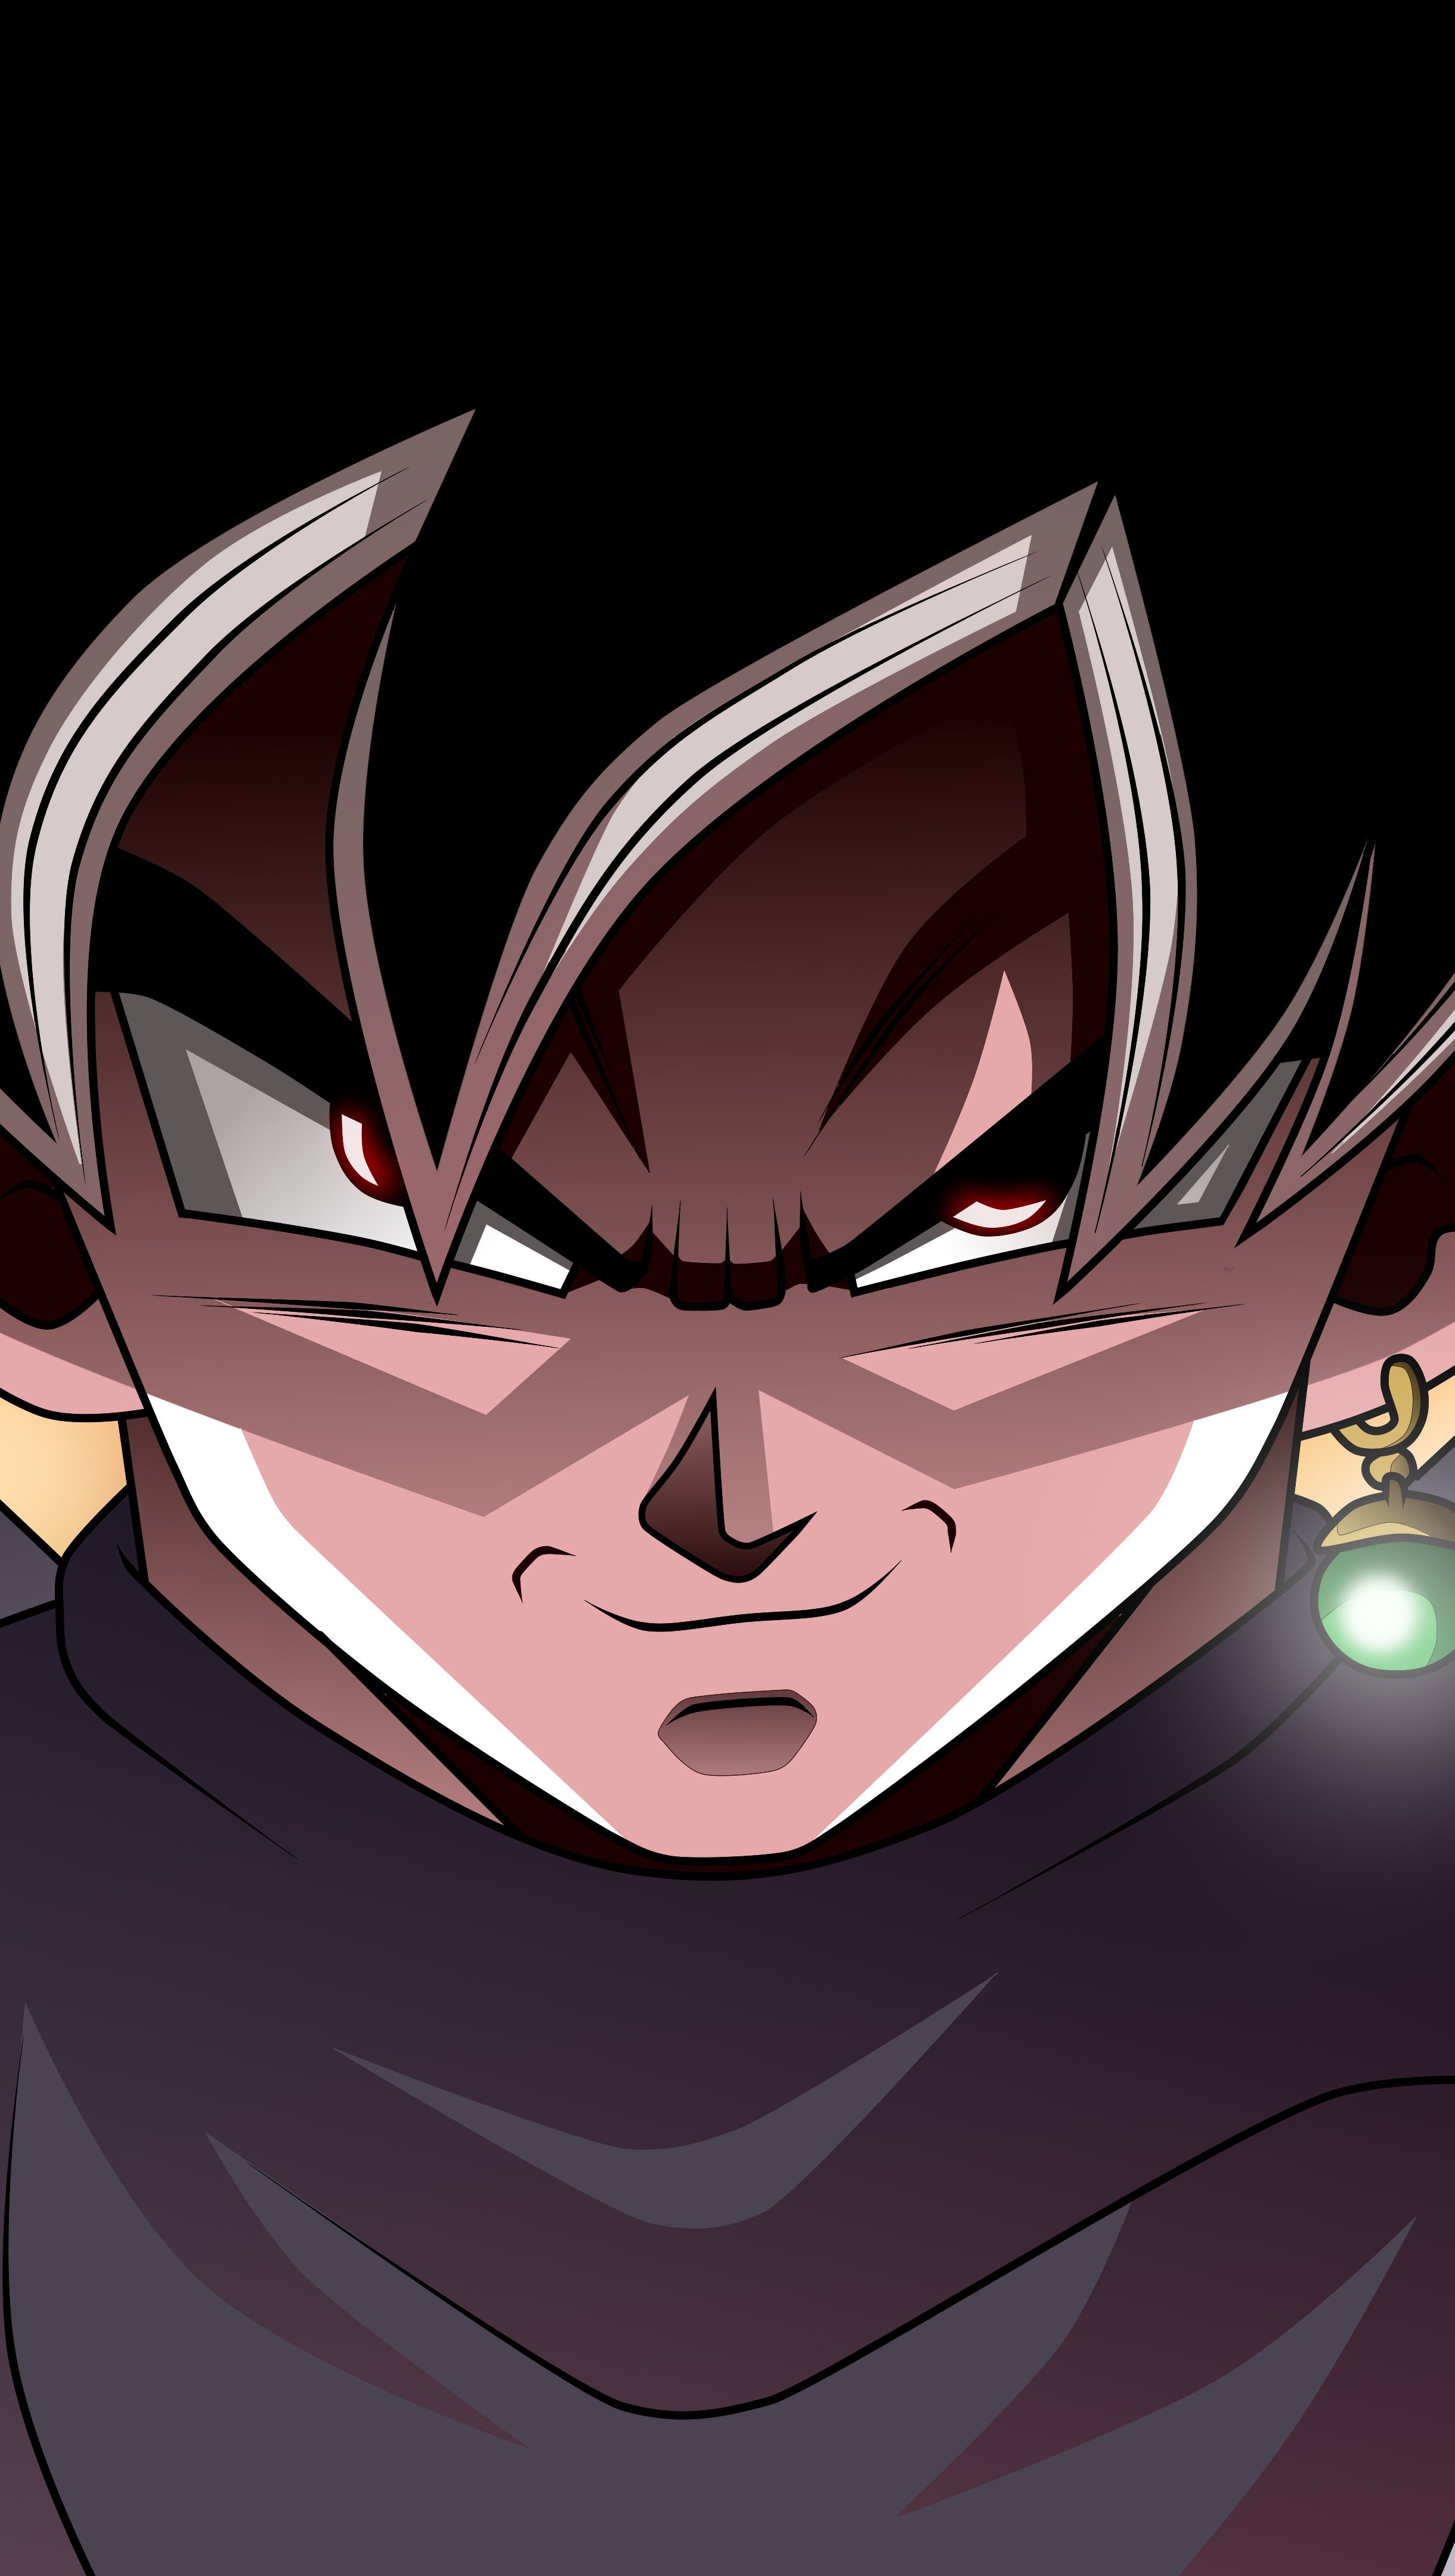 Black Goku Dragon Ball Super Anime Wallpaper 8k Ultra HD ID:3440